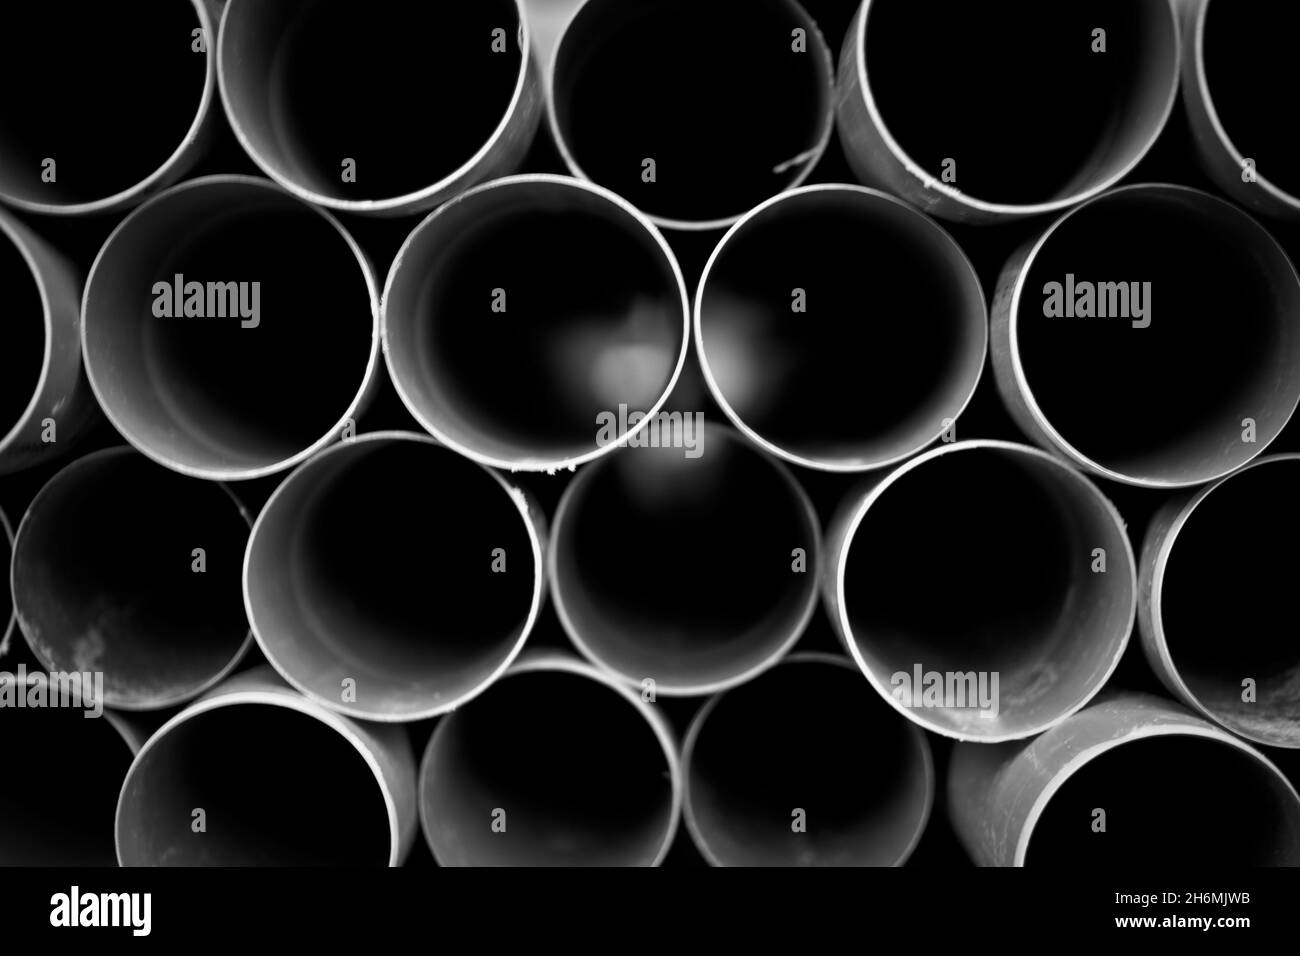 Pvc pipes Stock Photo